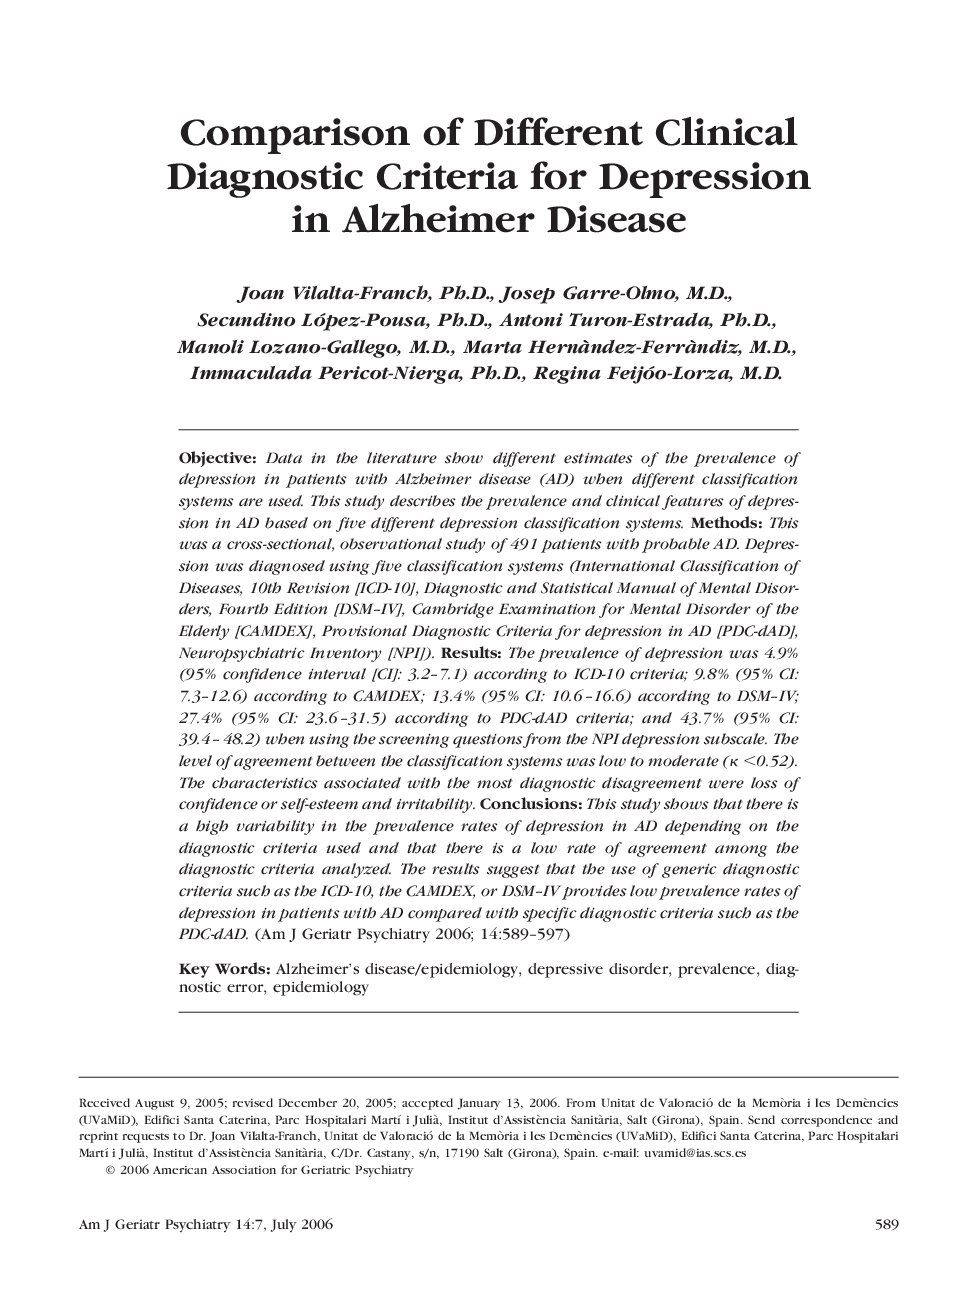 Comparison of Different Clinical Diagnostic Criteria for Depression in Alzheimer Disease